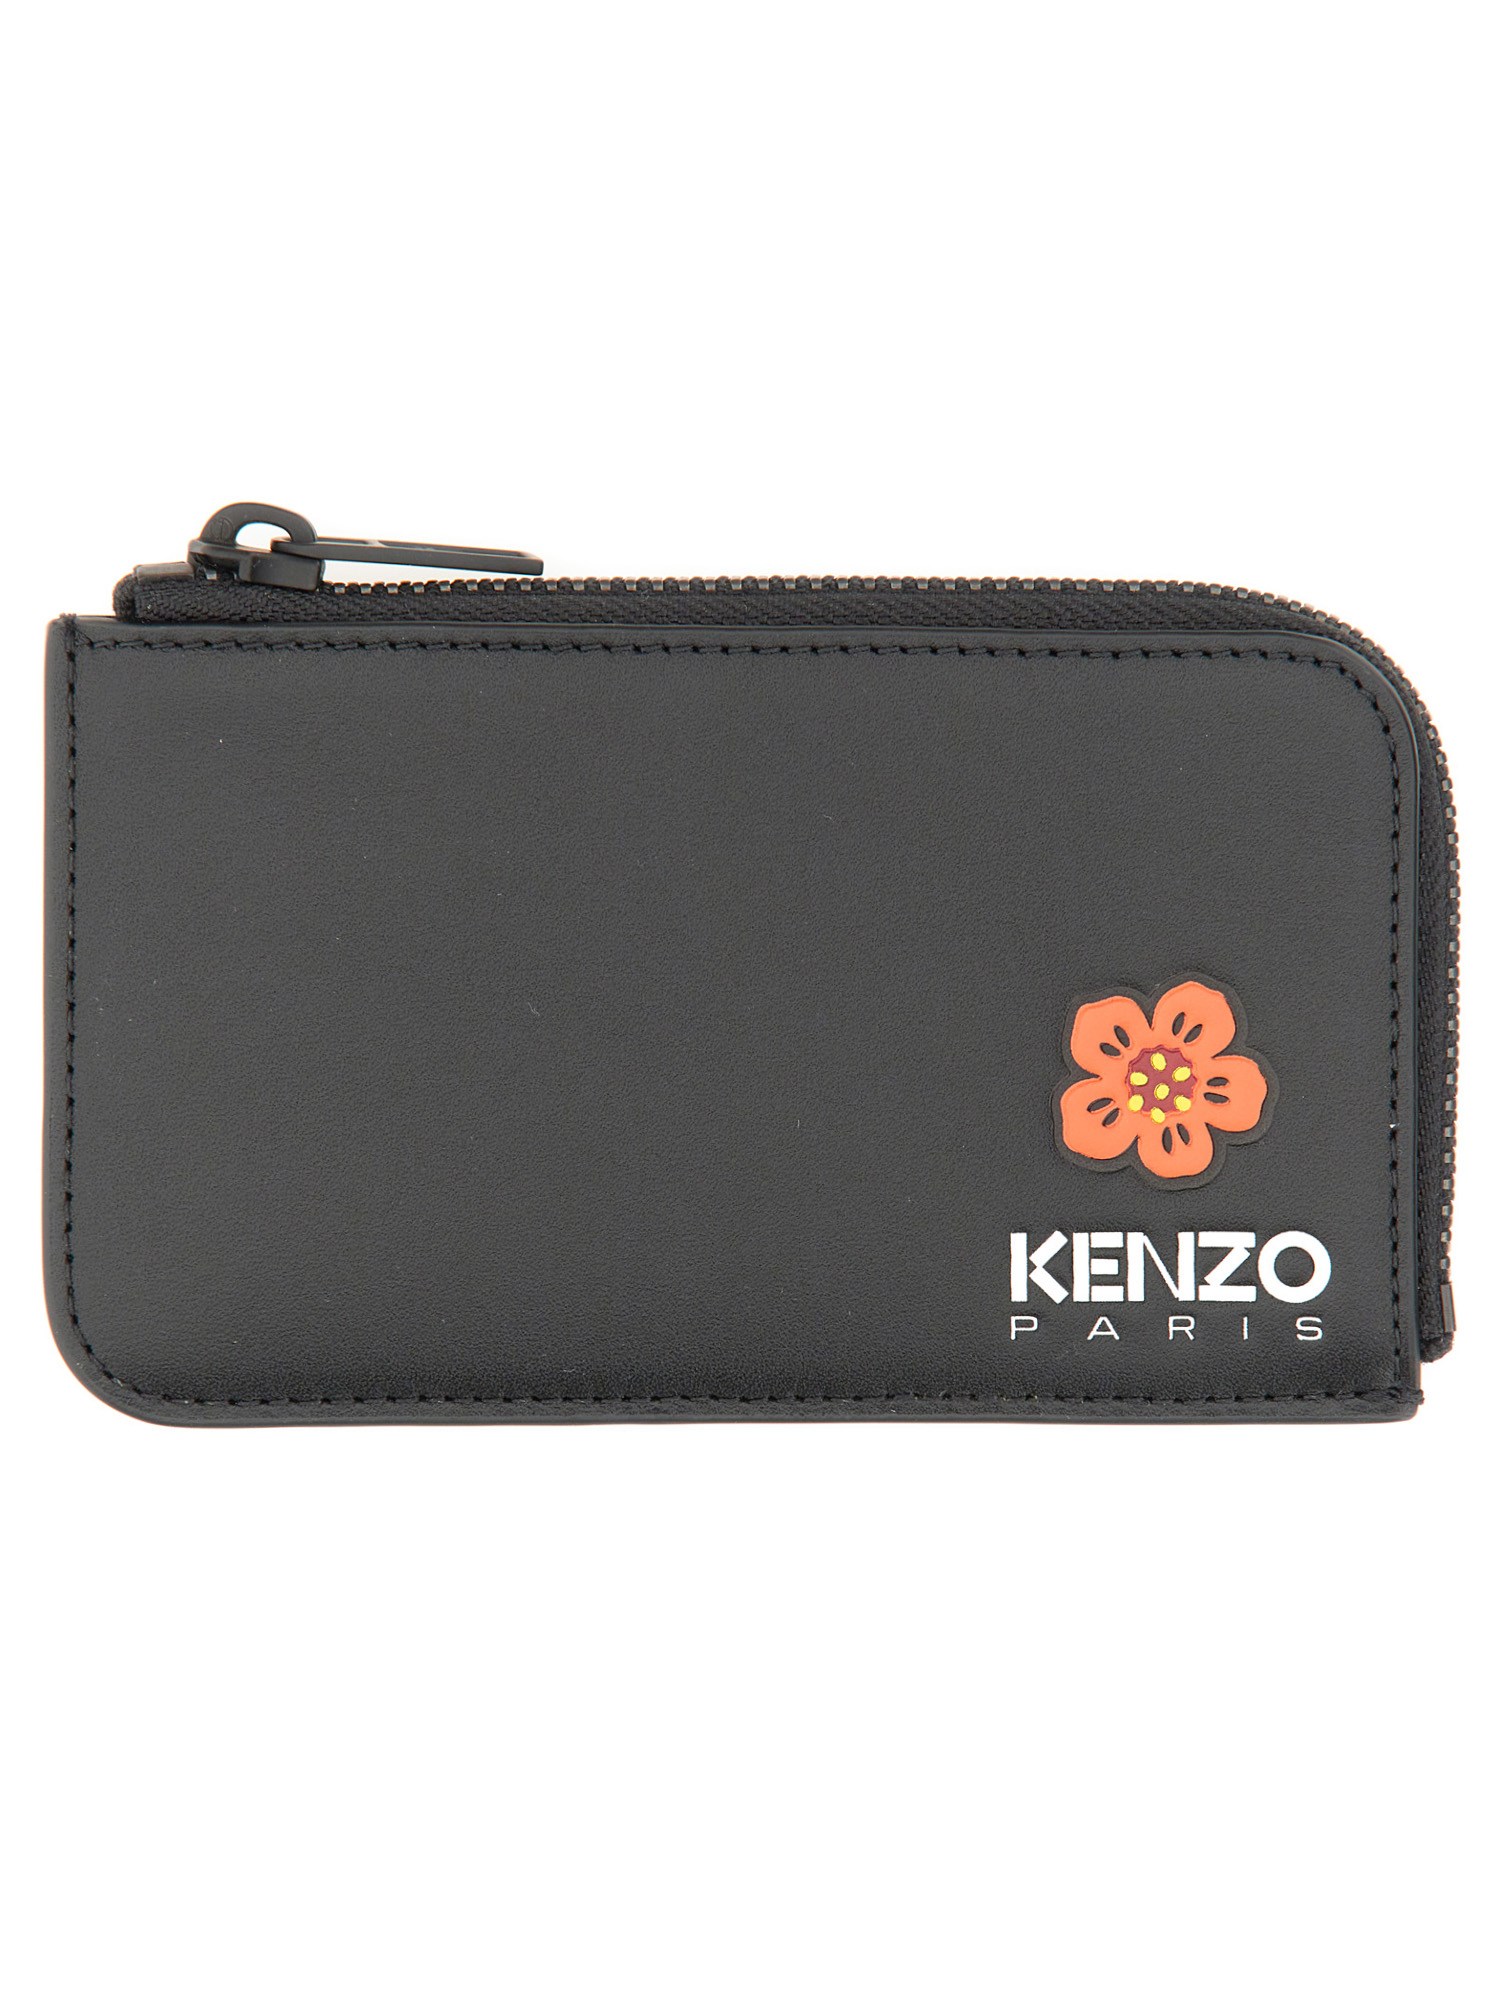 kenzo leather card holder